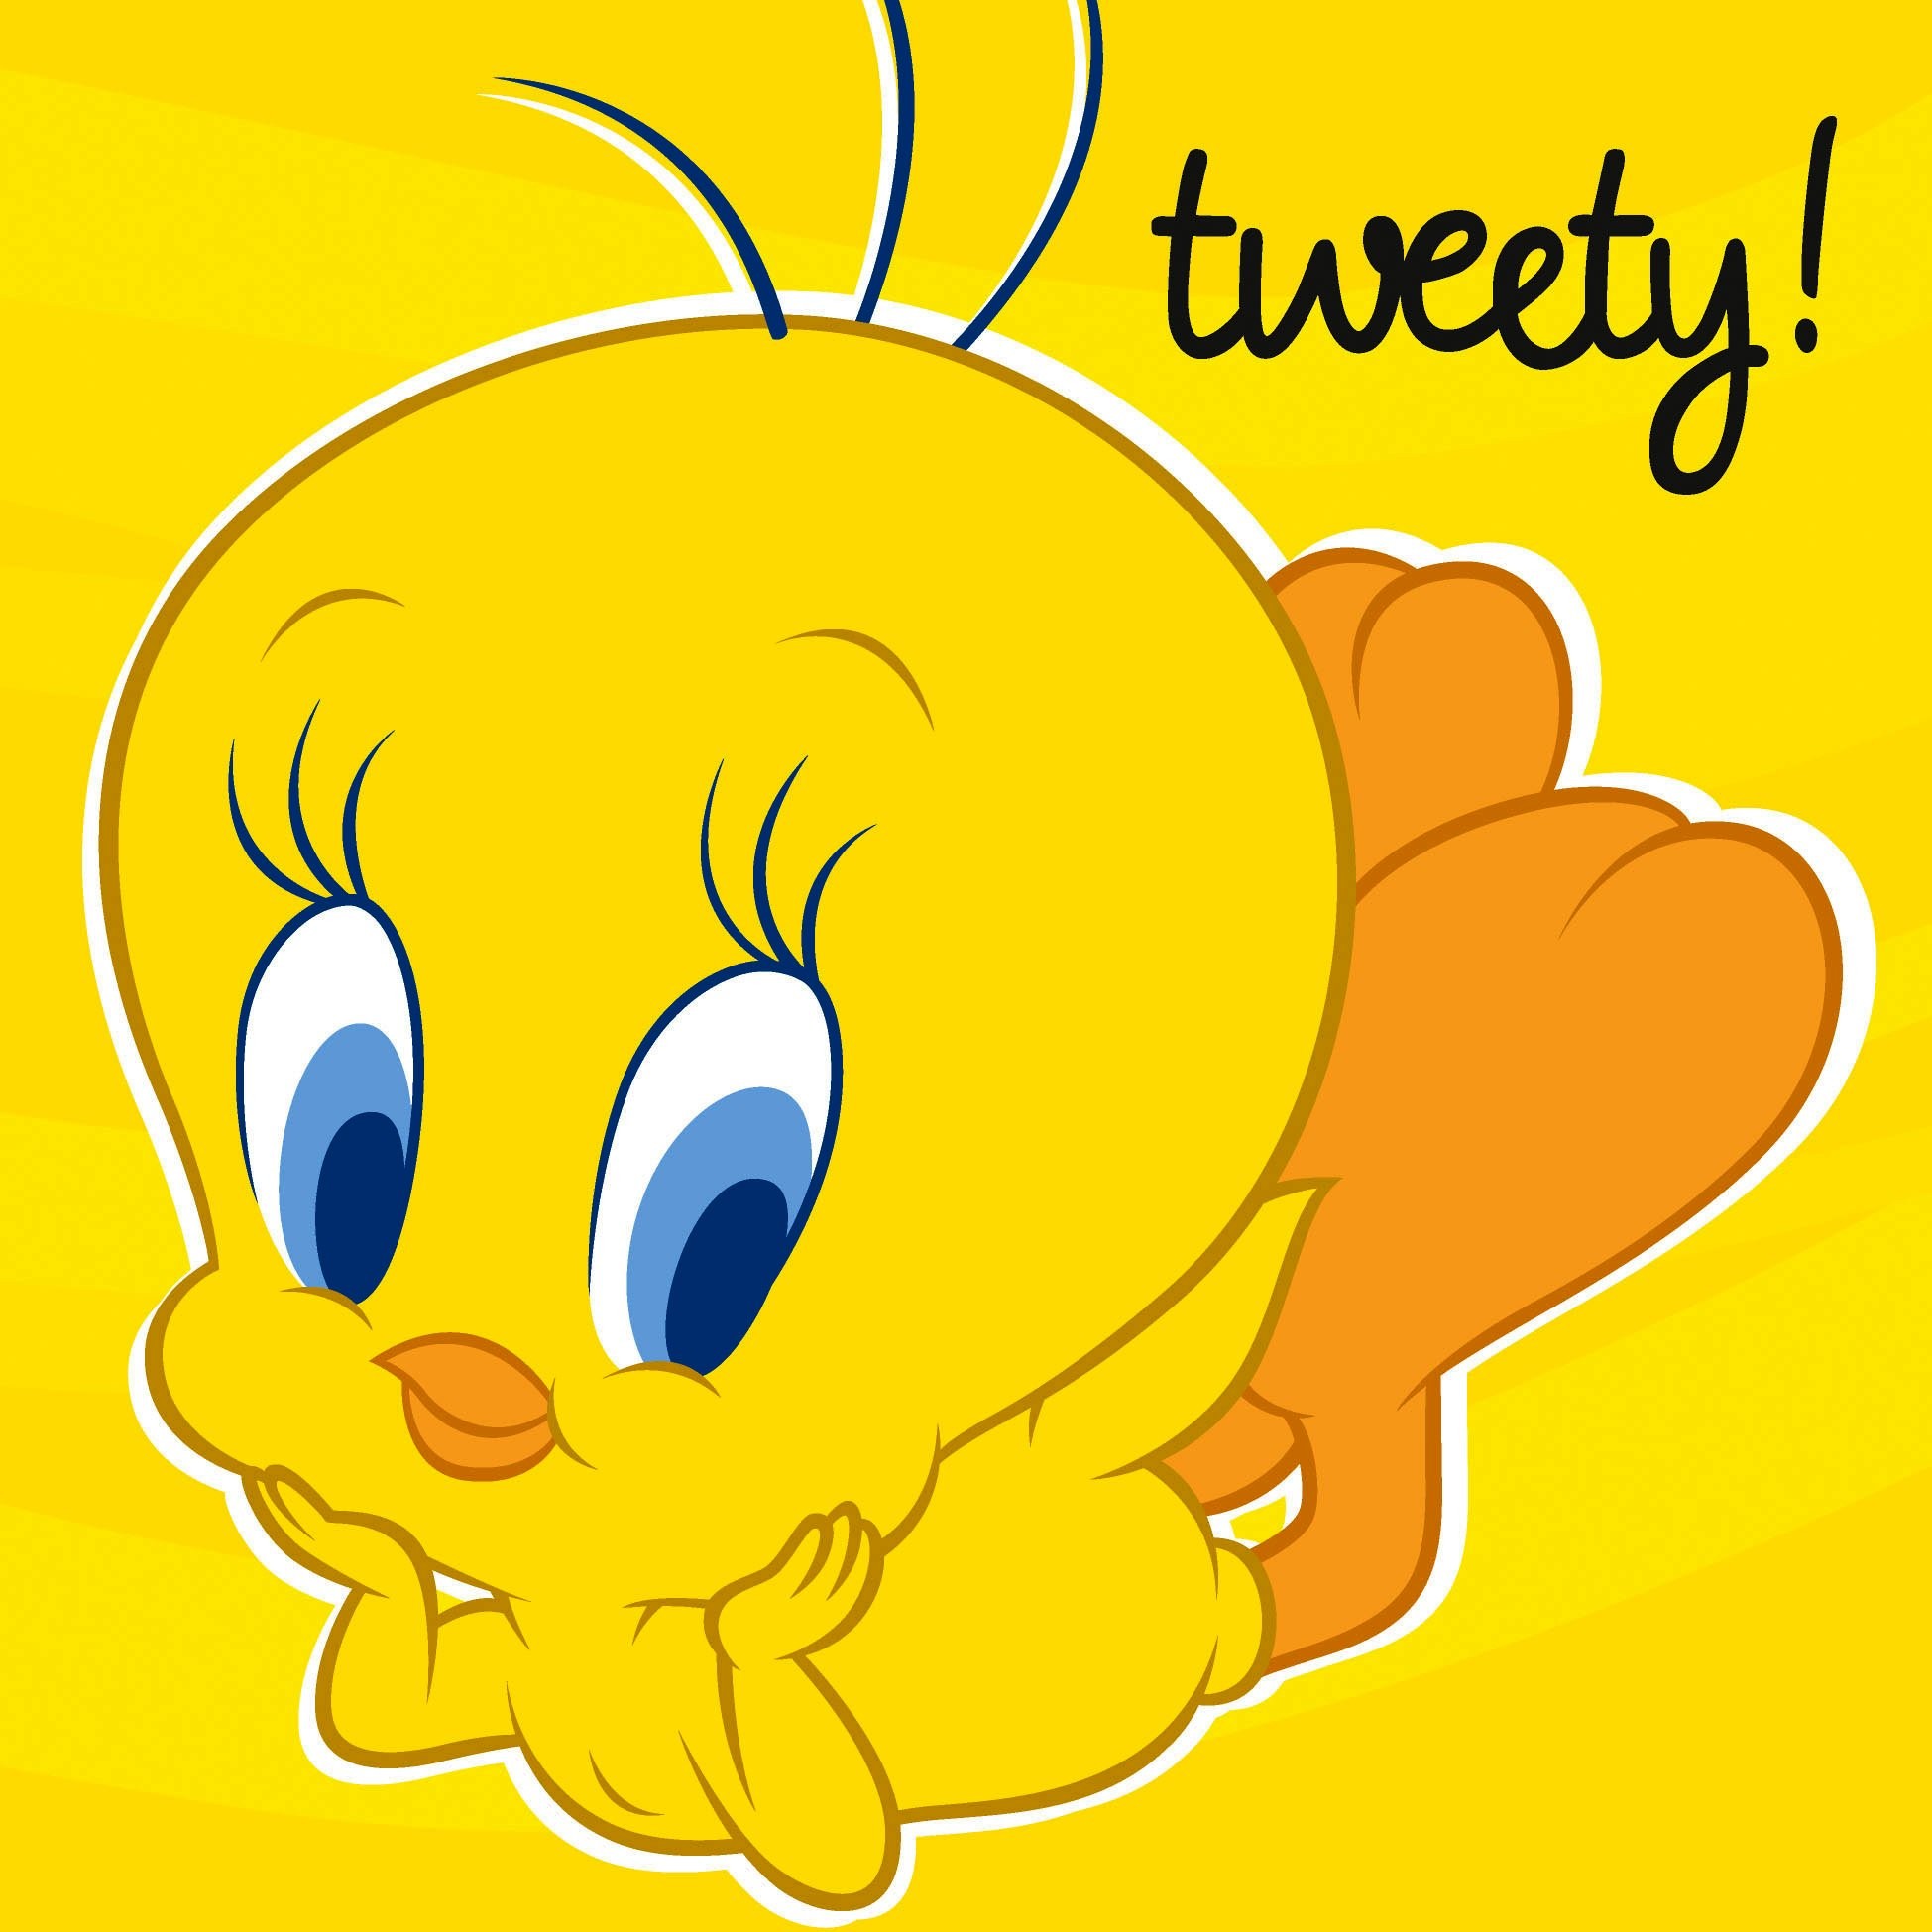 tweety wallpaper hd,cartoon,yellow,animated cartoon,line,illustration